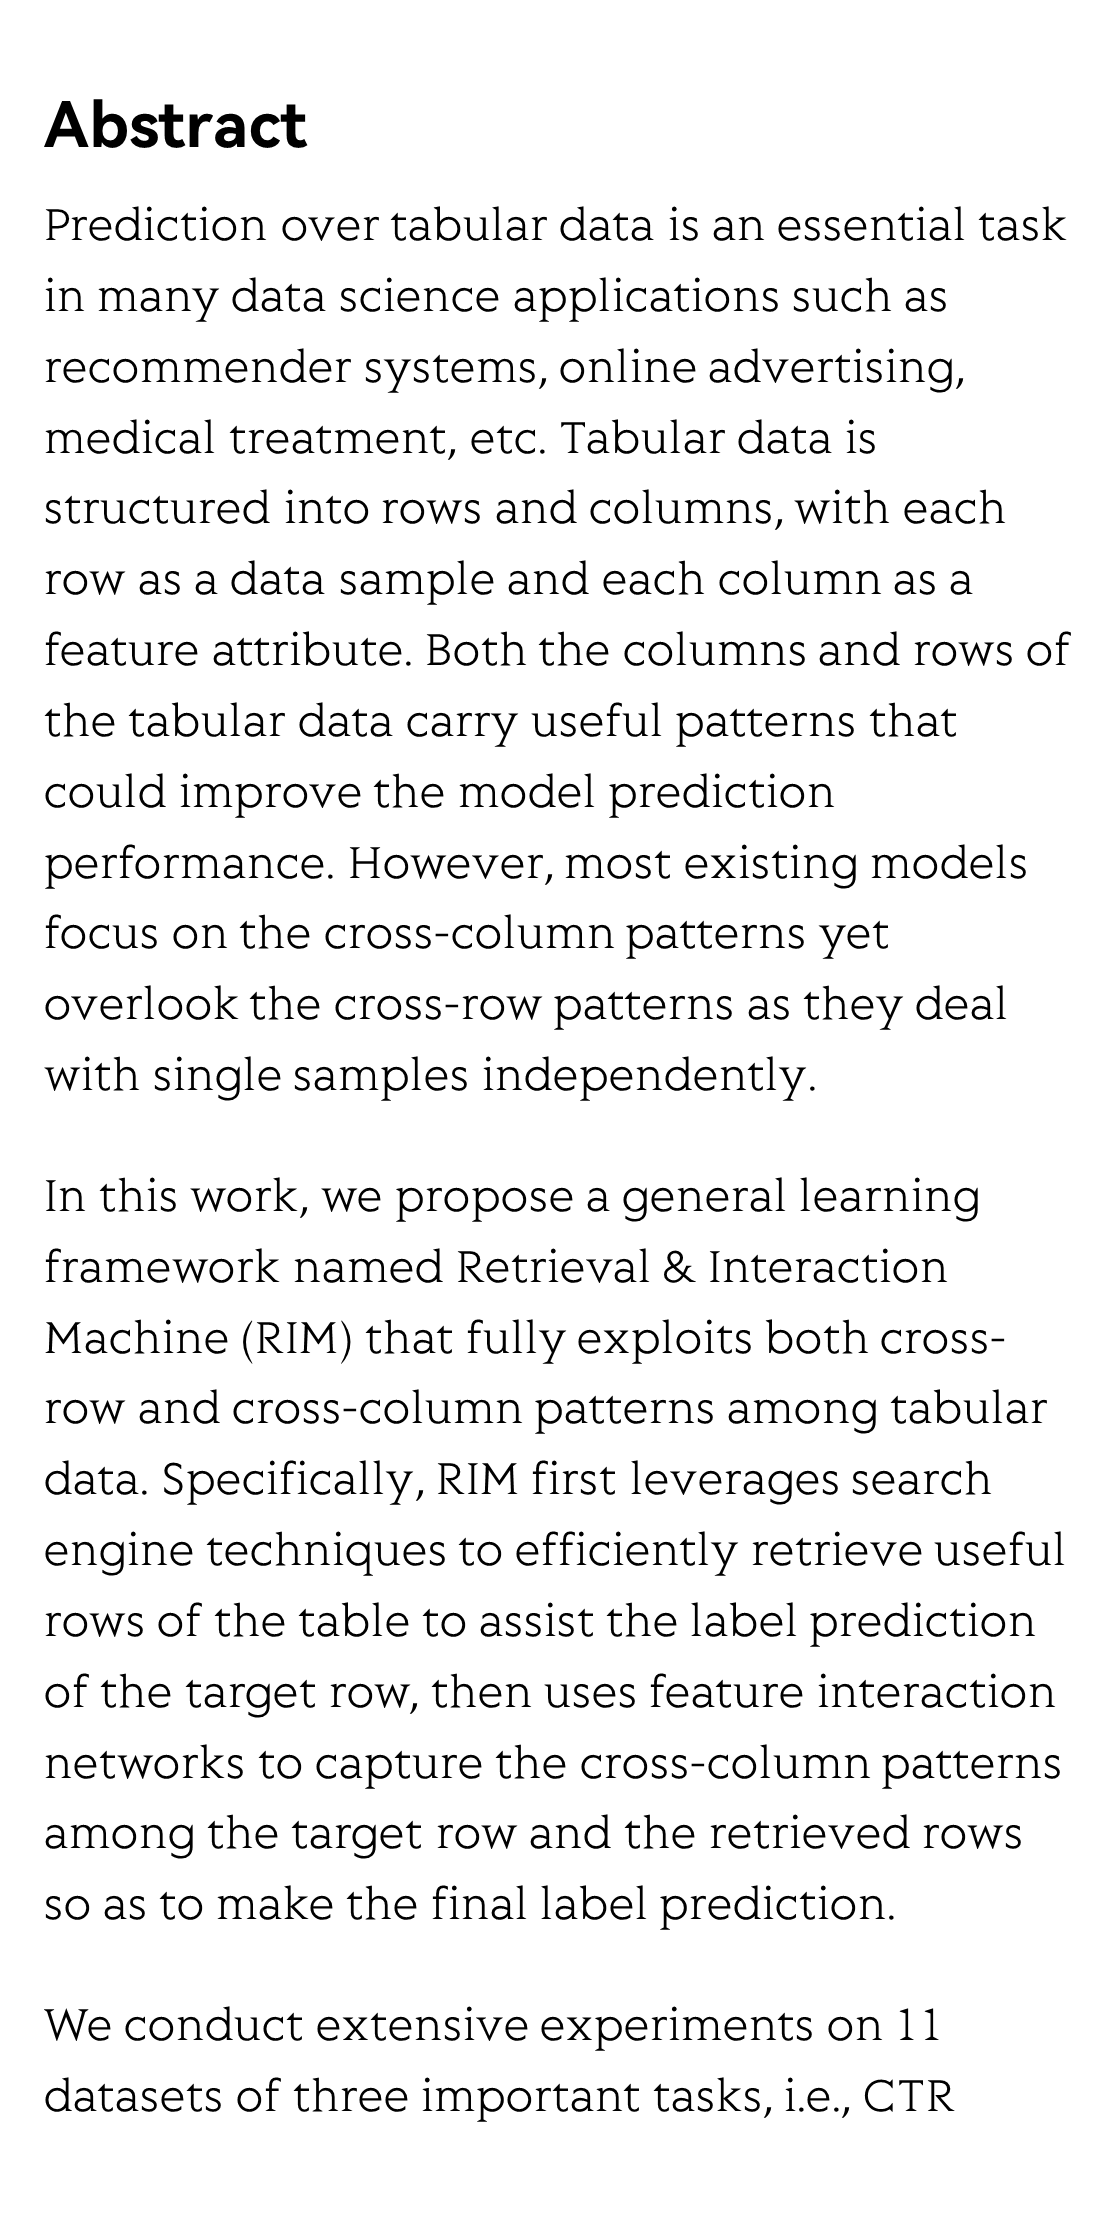 Retrieval & Interaction Machine for Tabular Data Prediction_2